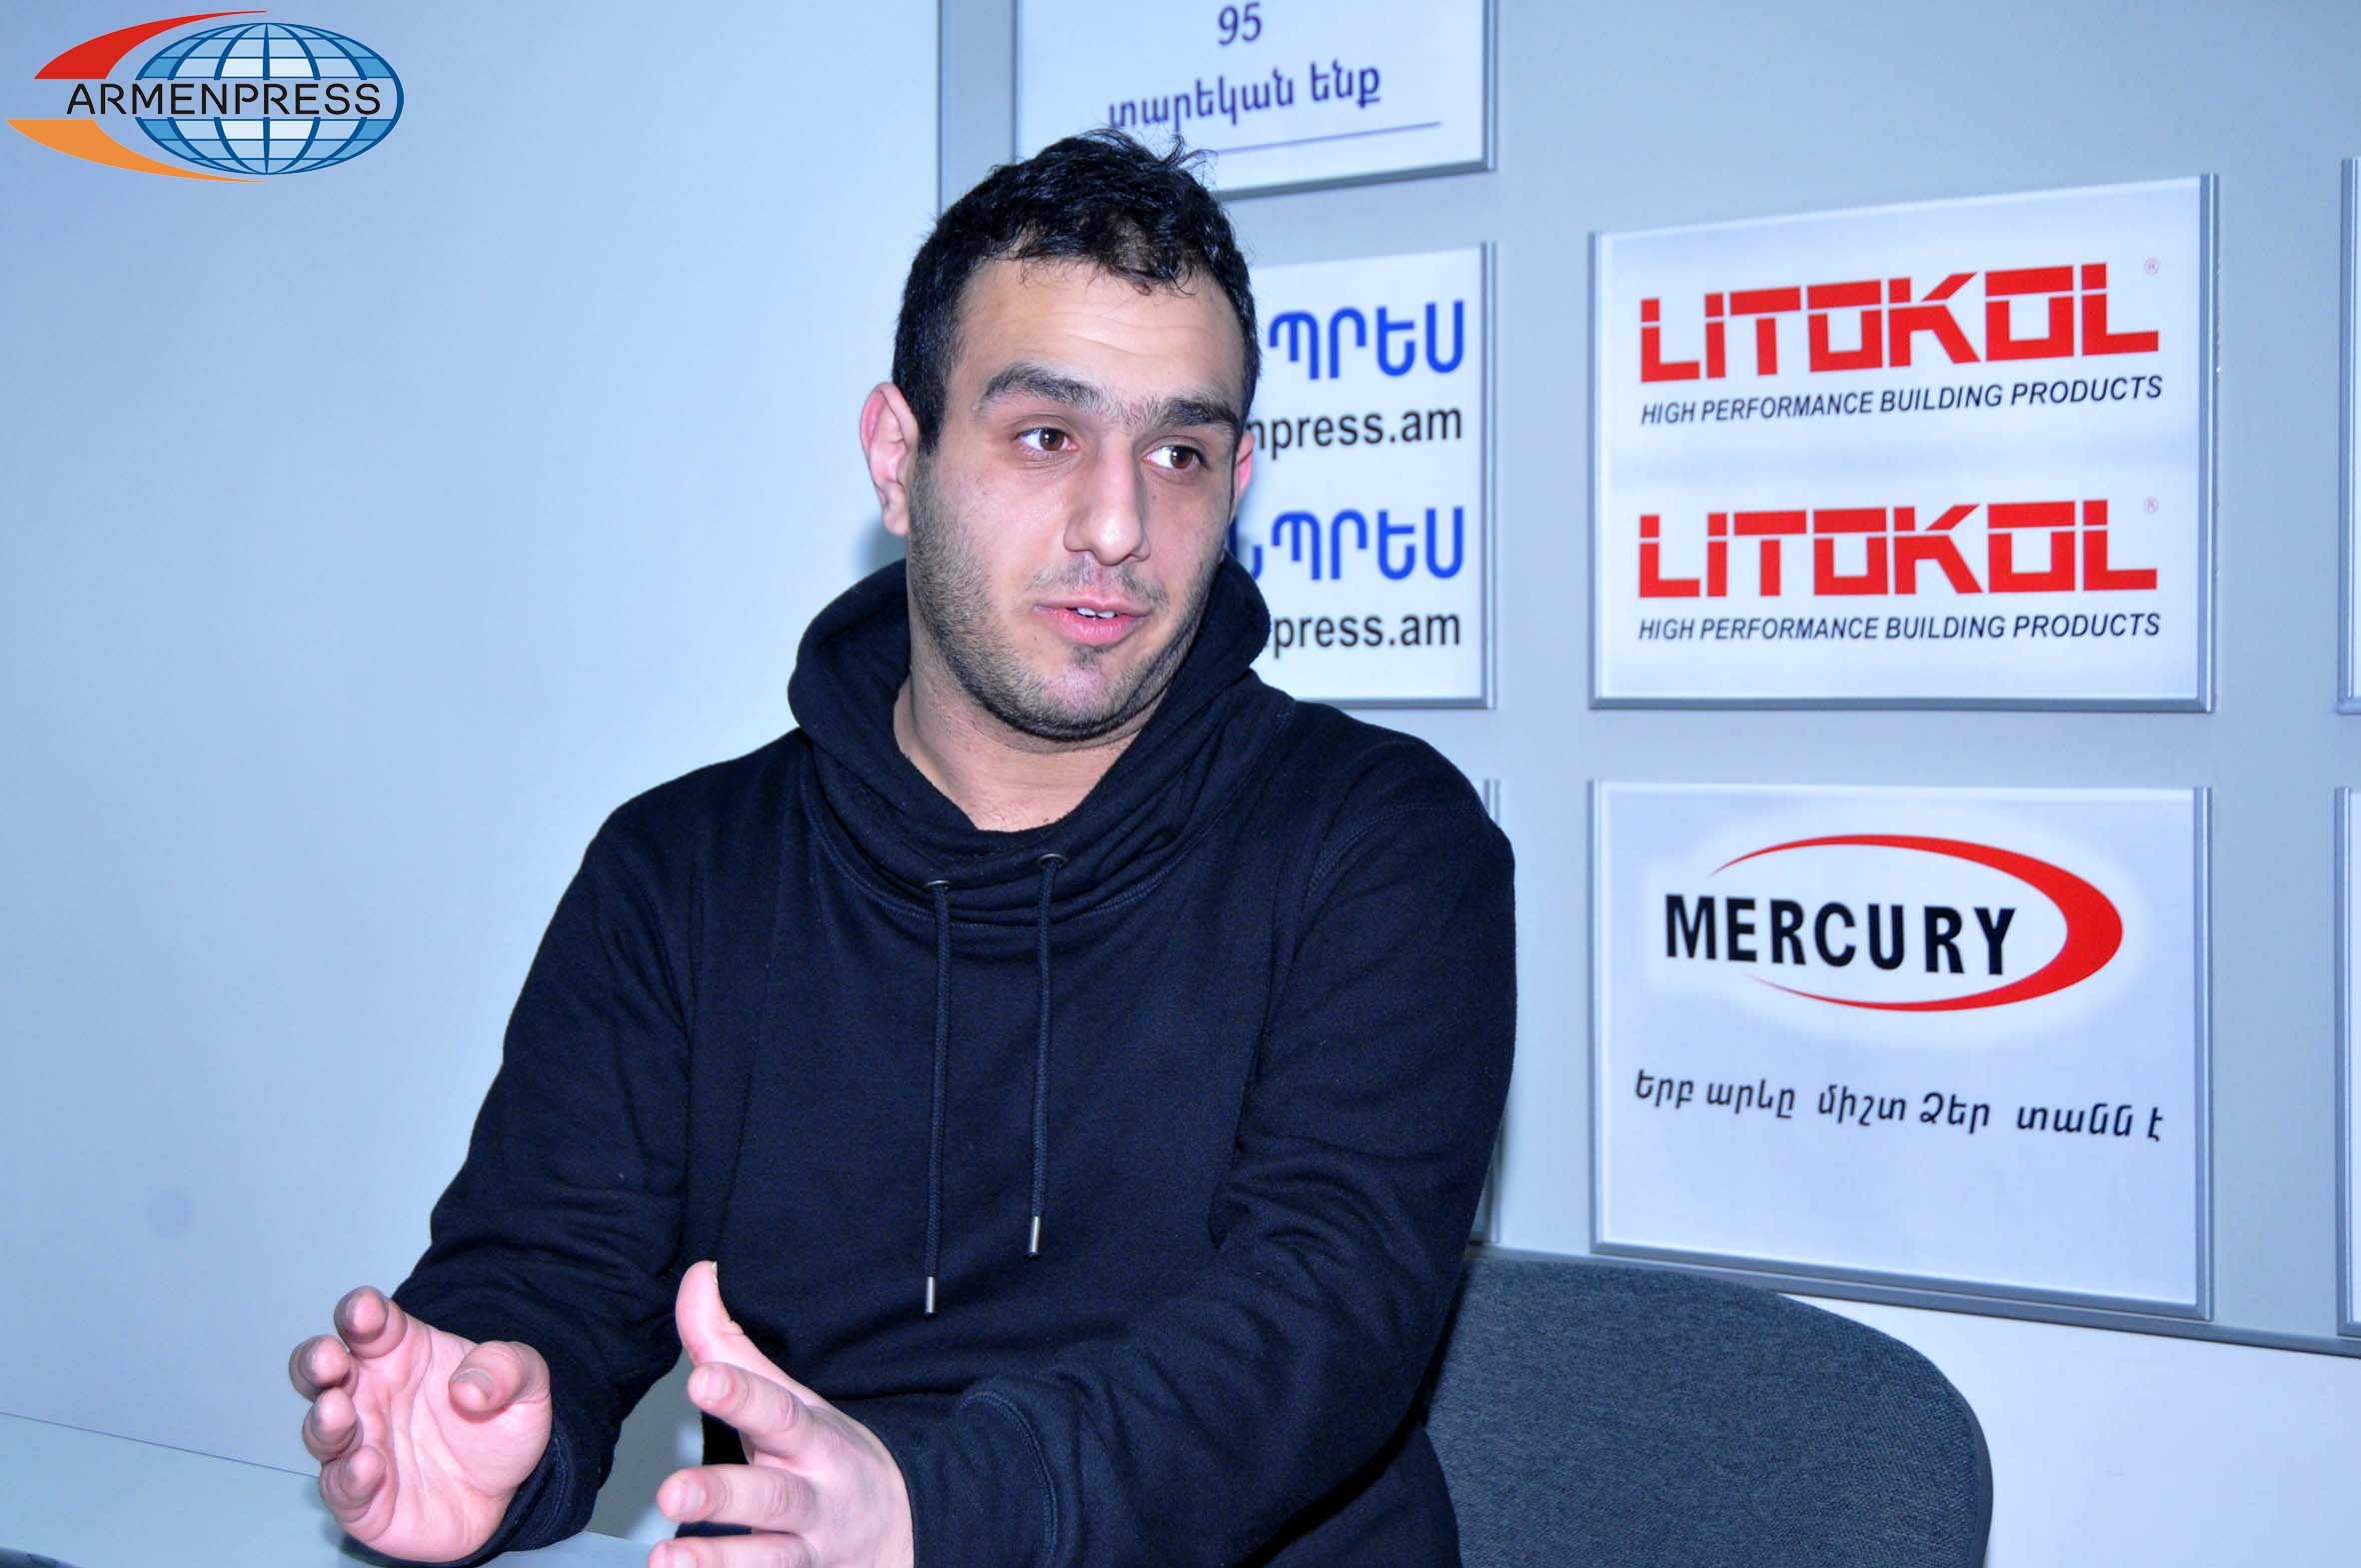 Chess champion joins Armenia’s Army